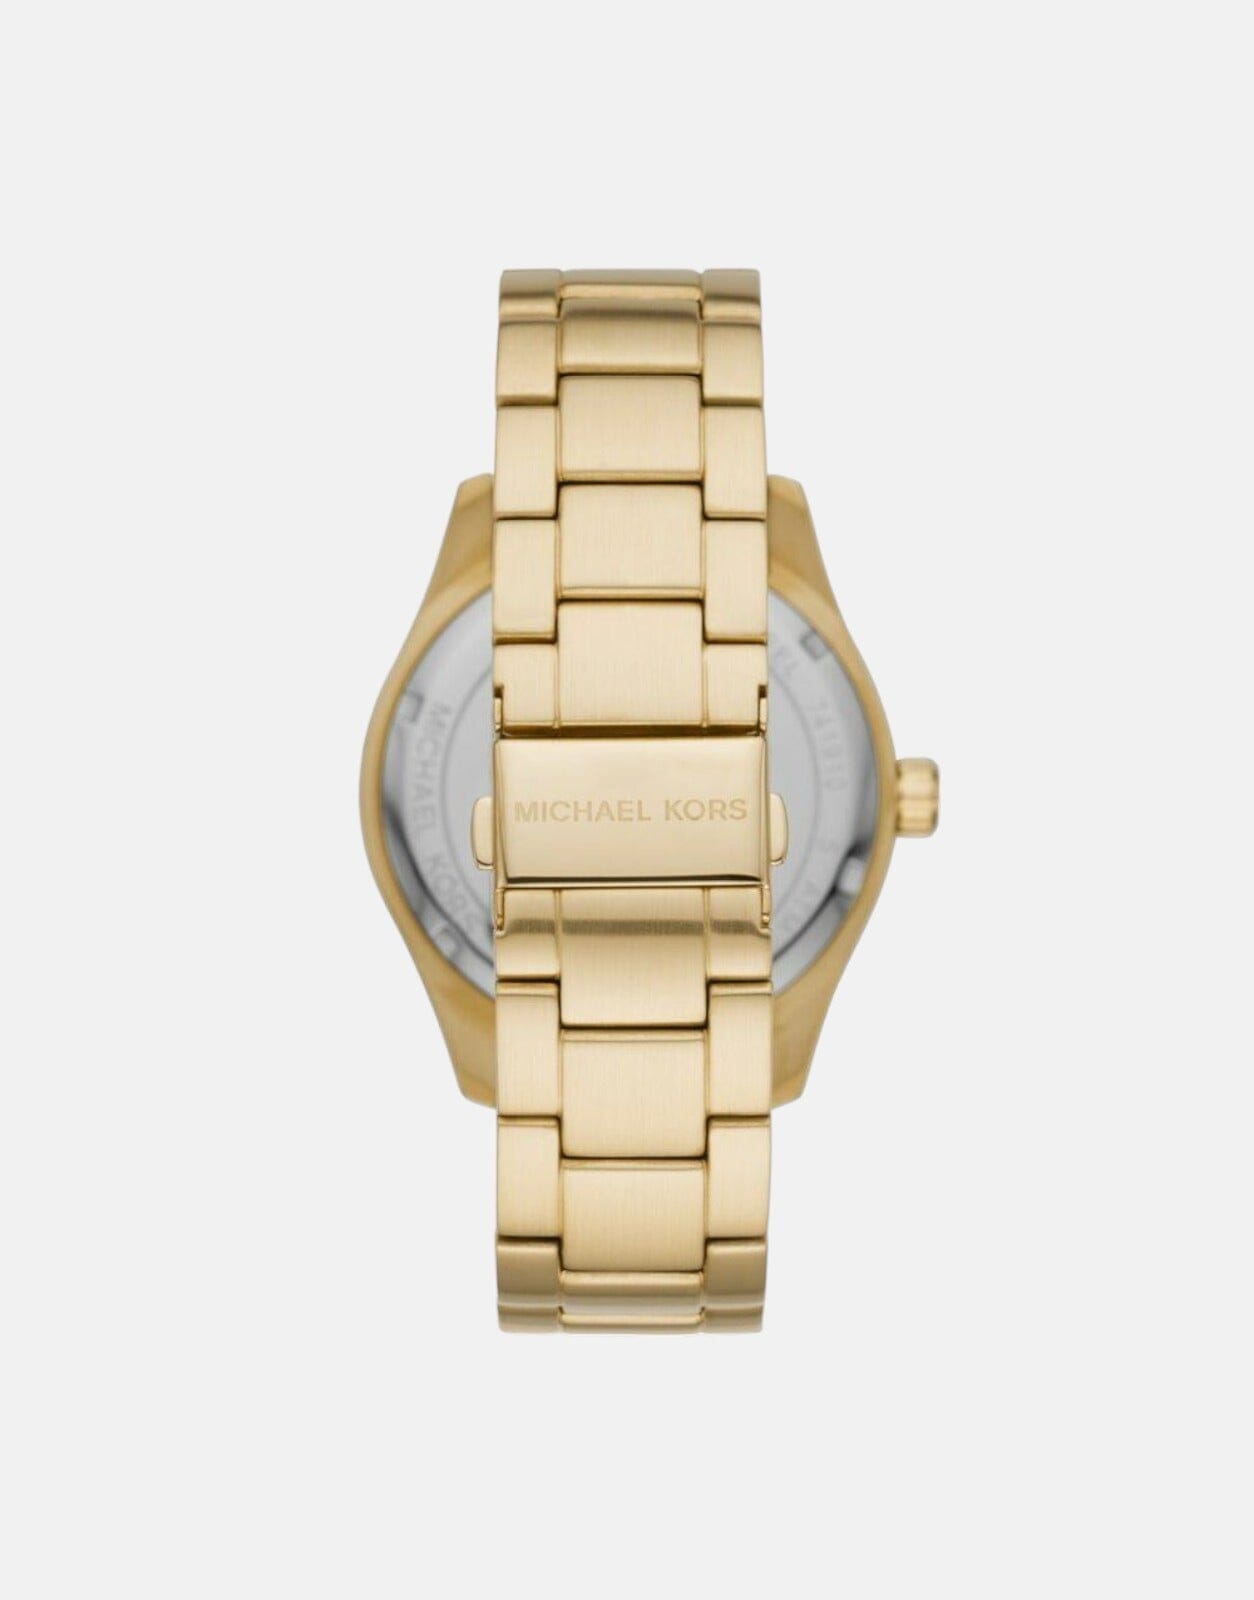 Michael Kors Layton Gold Stainless Steel Watch - Subwear